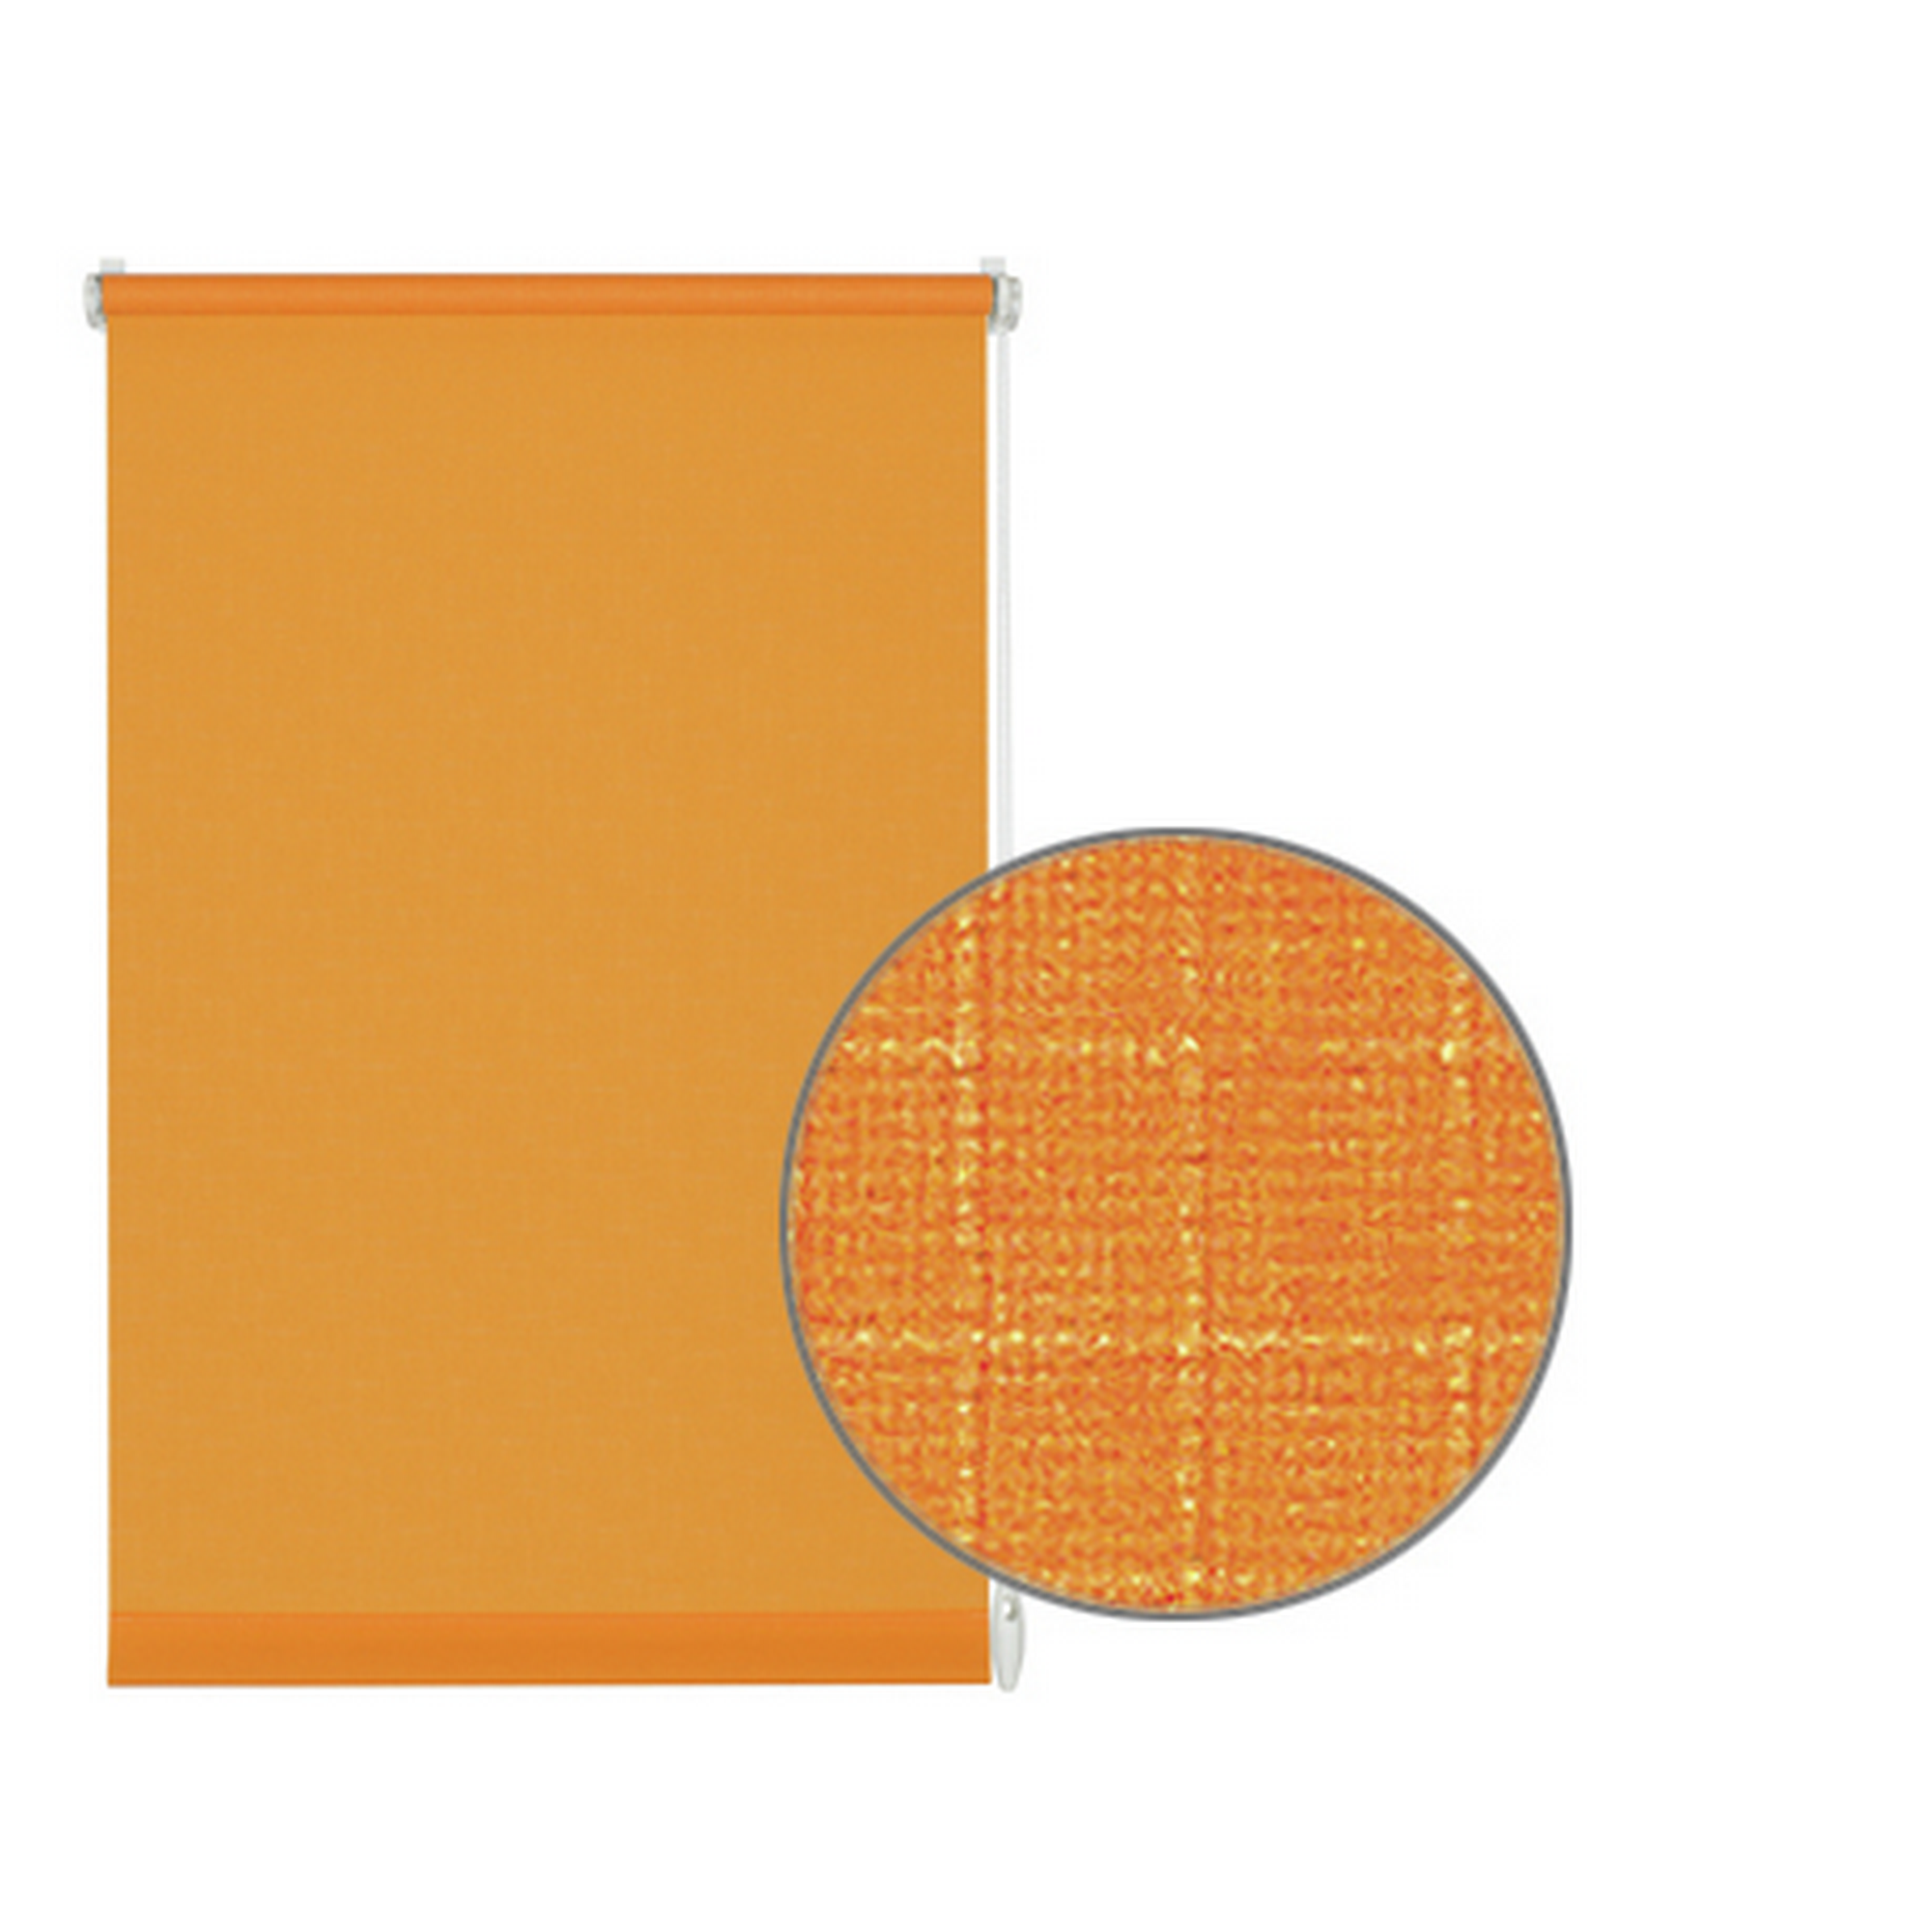 EasyFix Rollo 'Uni' orange 60 x 150 cn + product picture